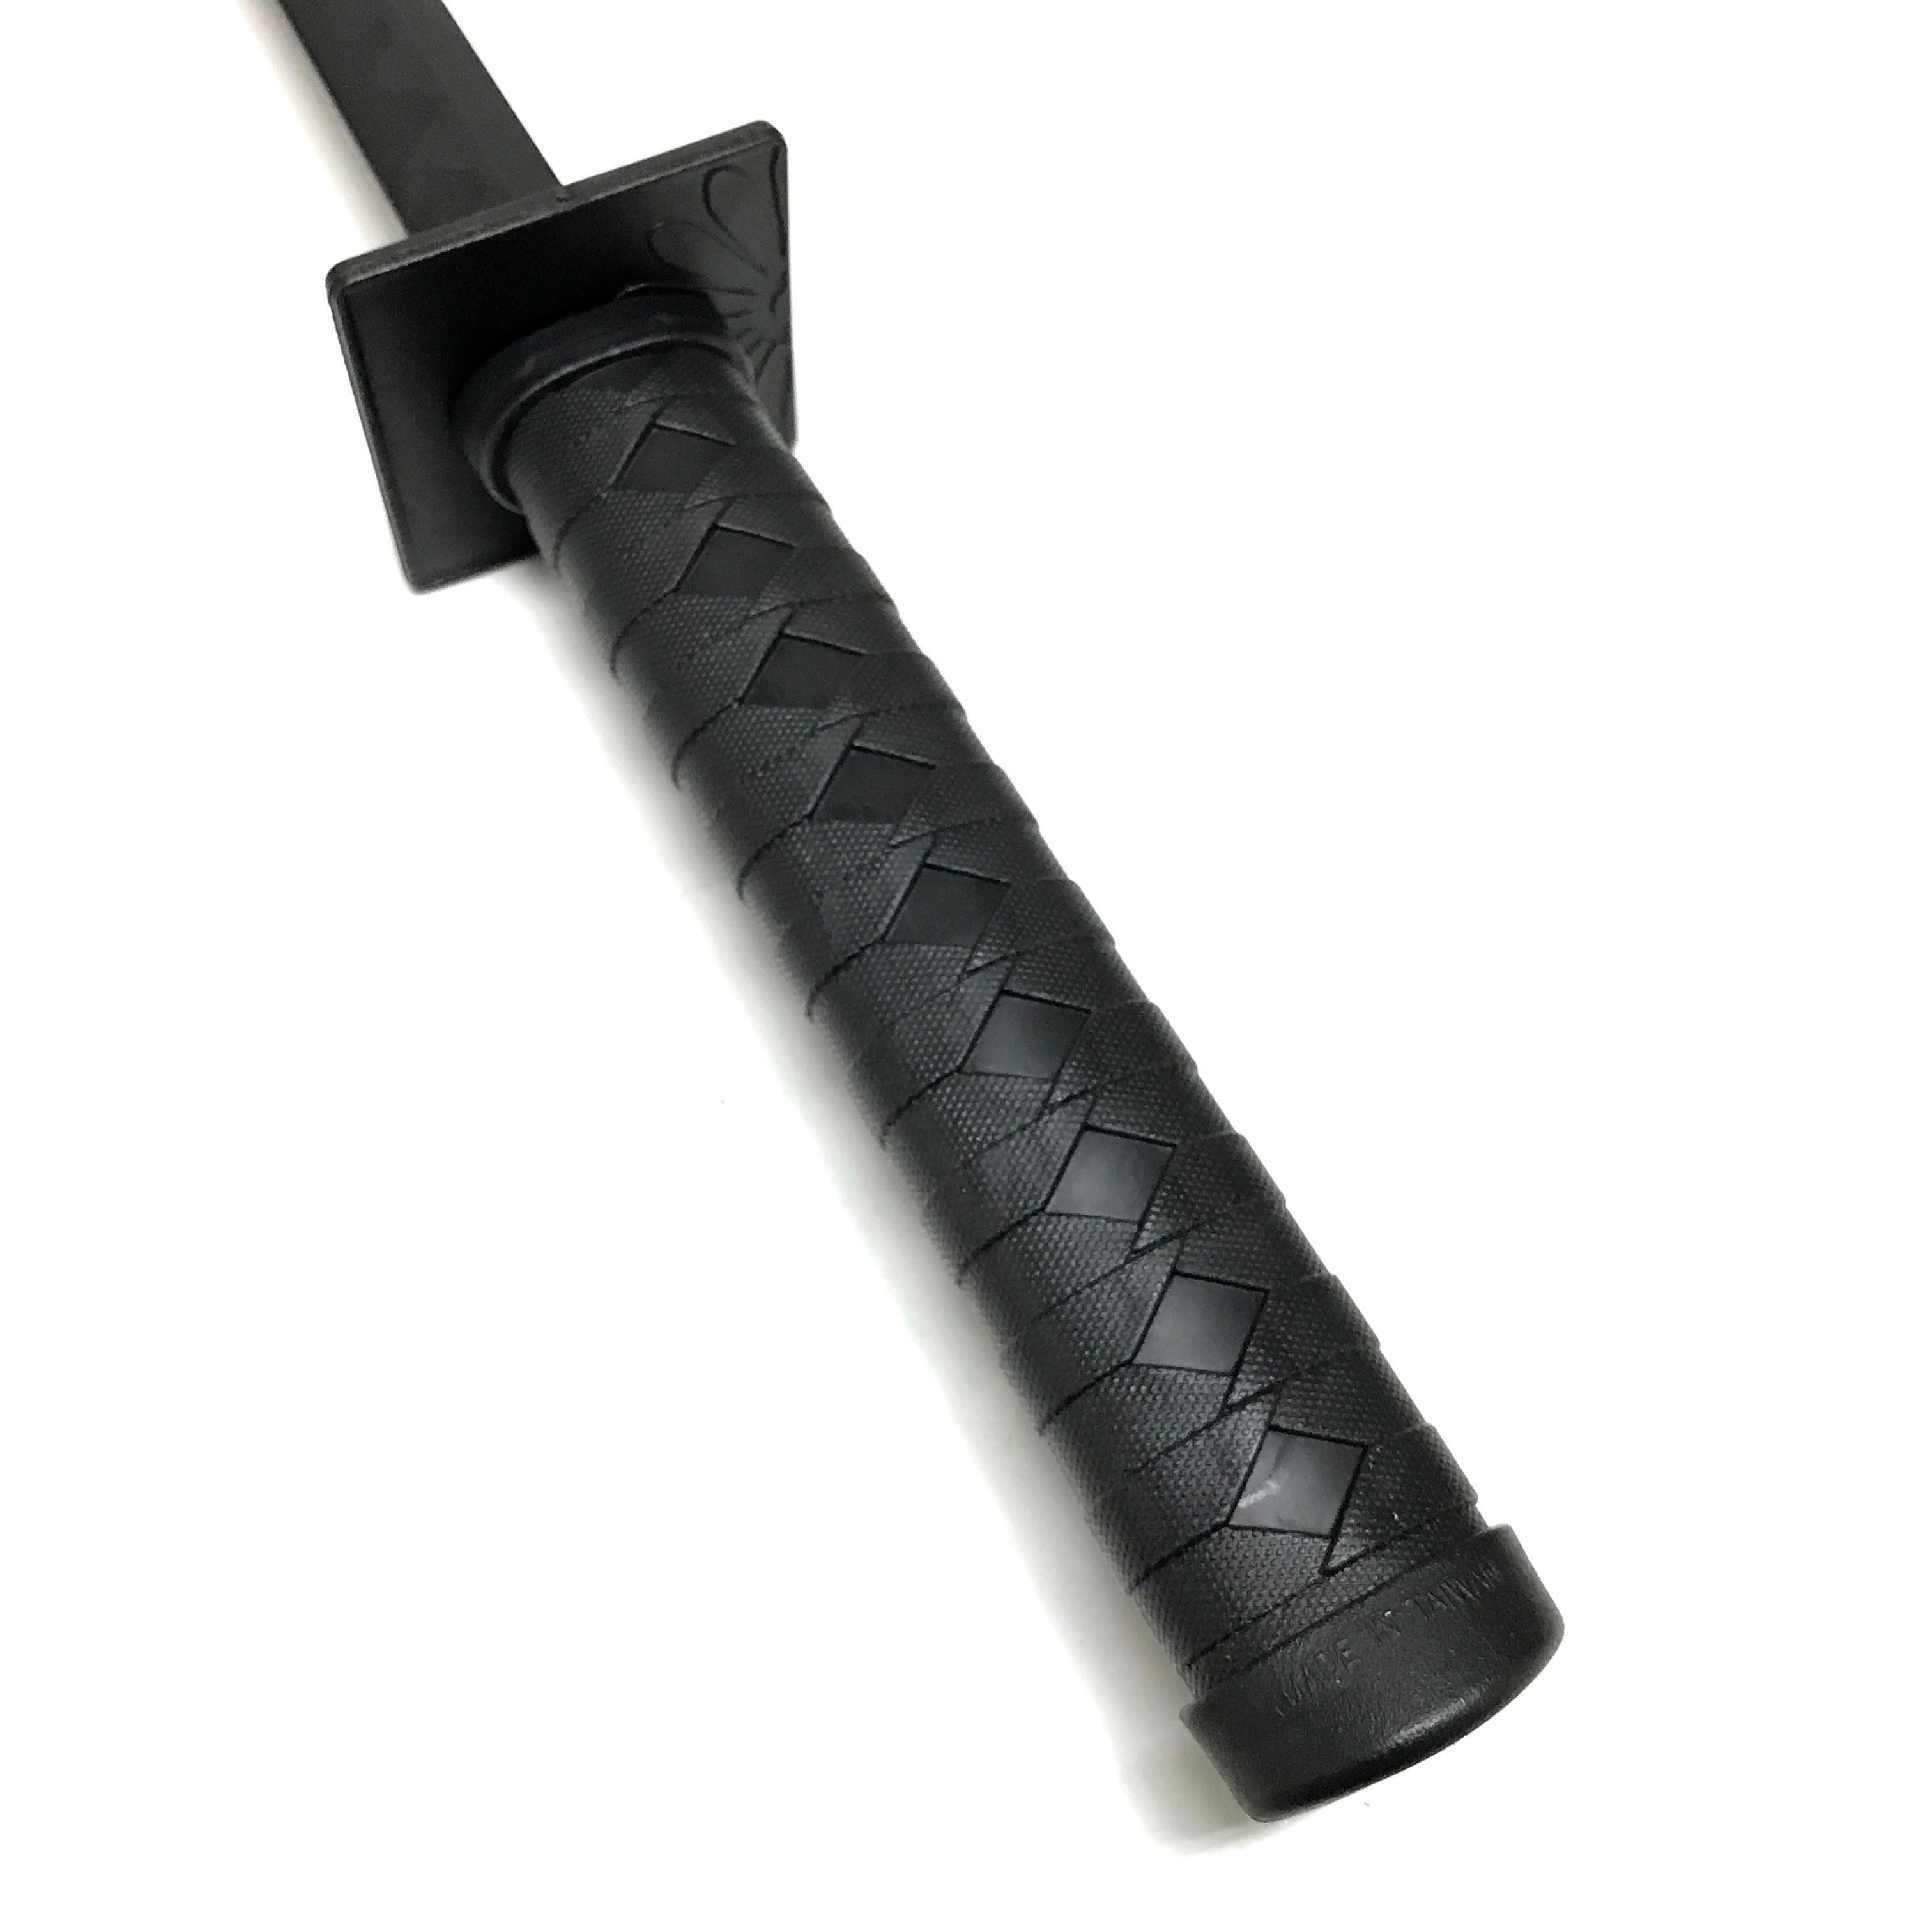 Polypropylene 34.75 Inch Black Wakizashi Sword Full Contact Stunt Prop - Perfect for Training